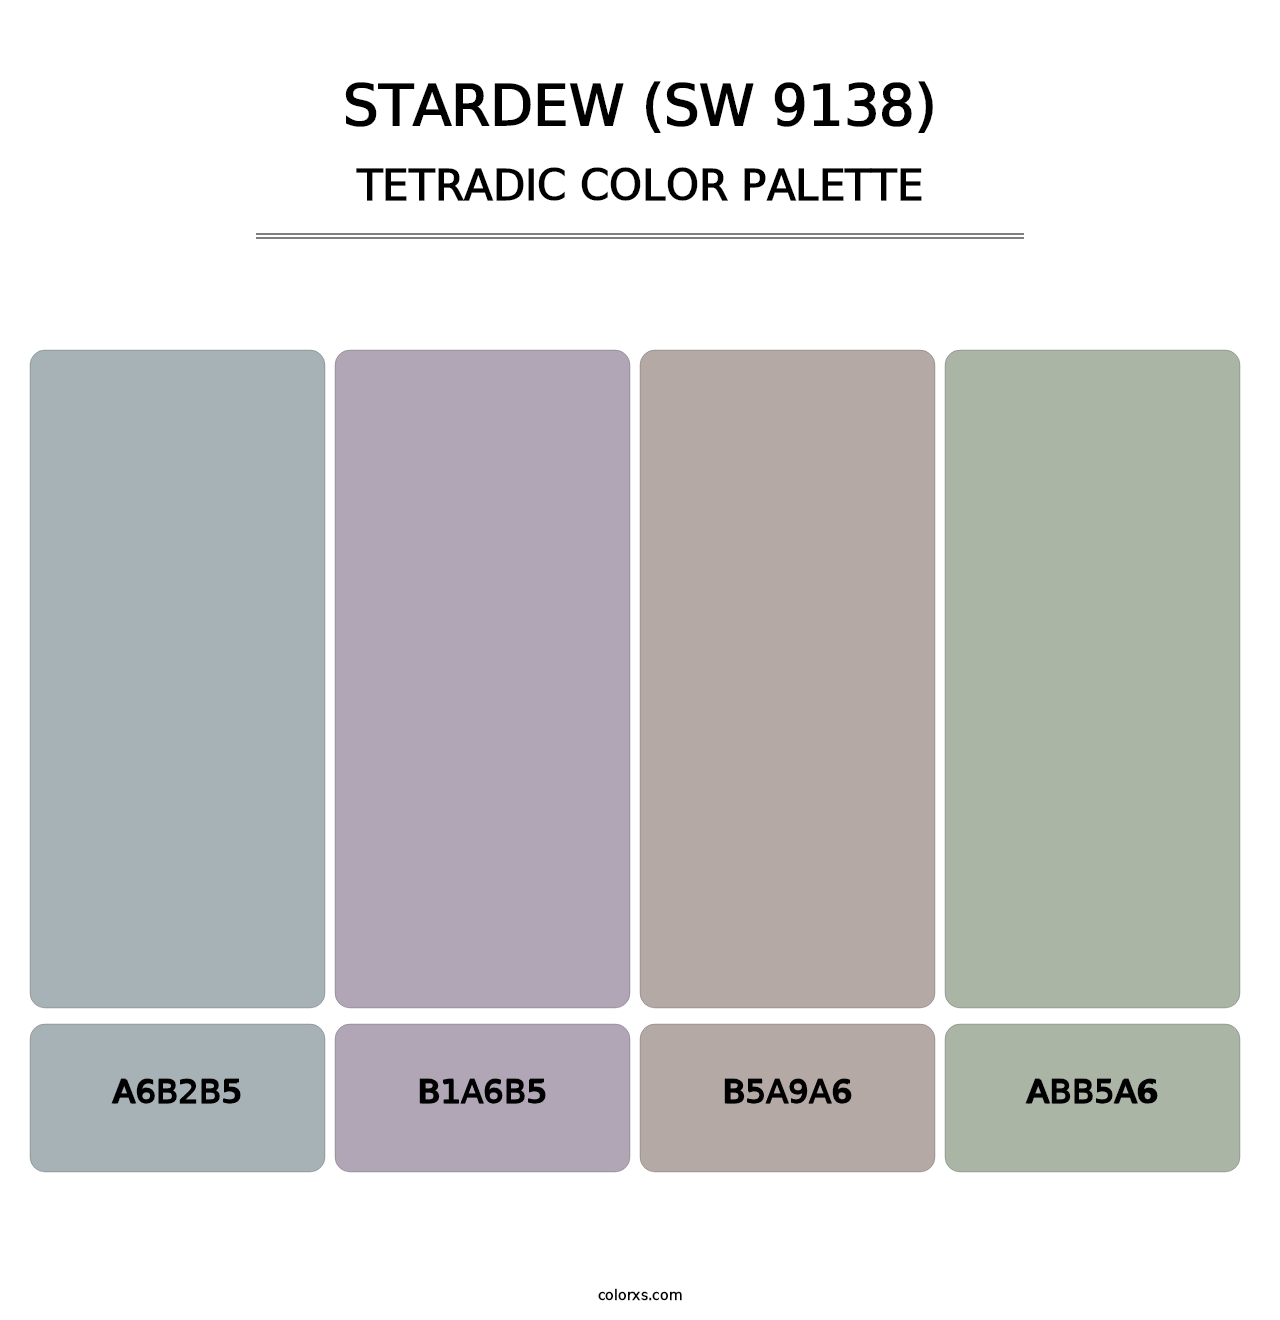 Stardew (SW 9138) - Tetradic Color Palette